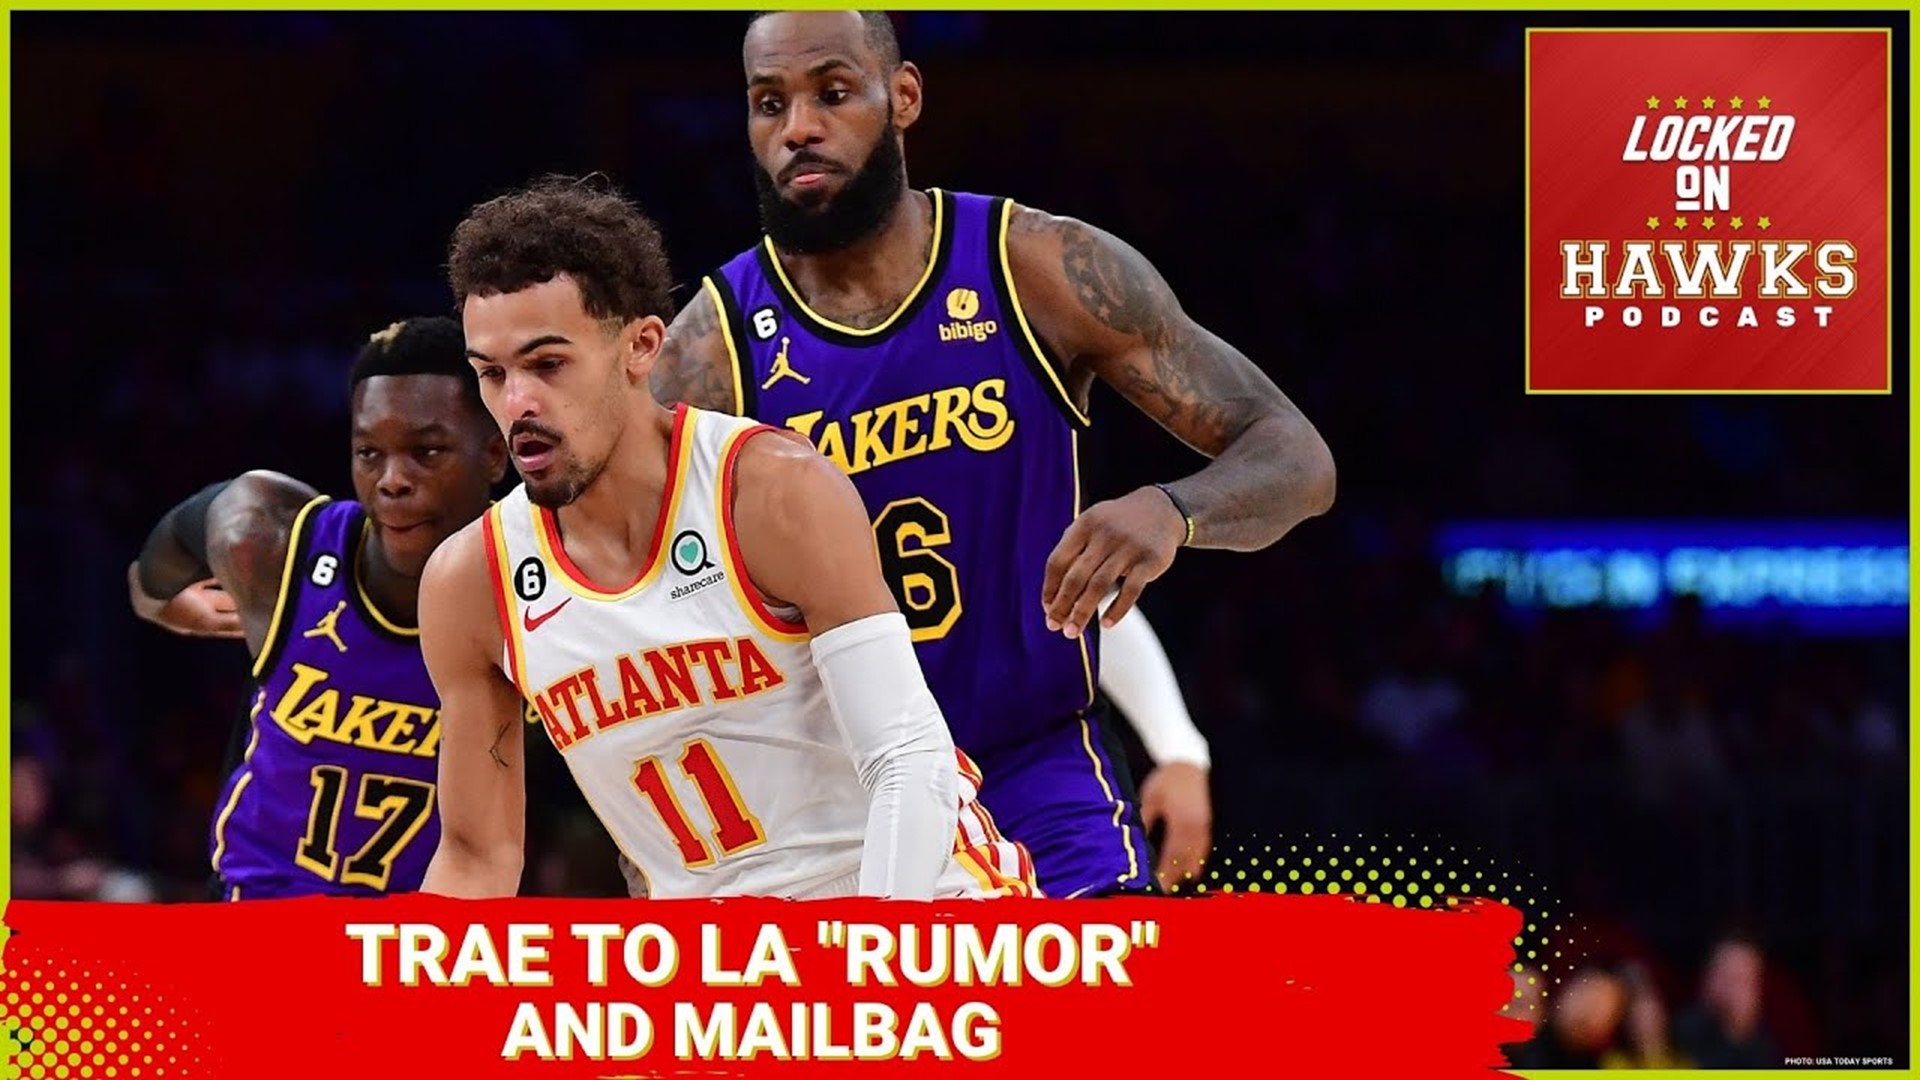 The Trae Young-Los Angeles Lakers "rumor" and late May Atlanta Hawks mailbag